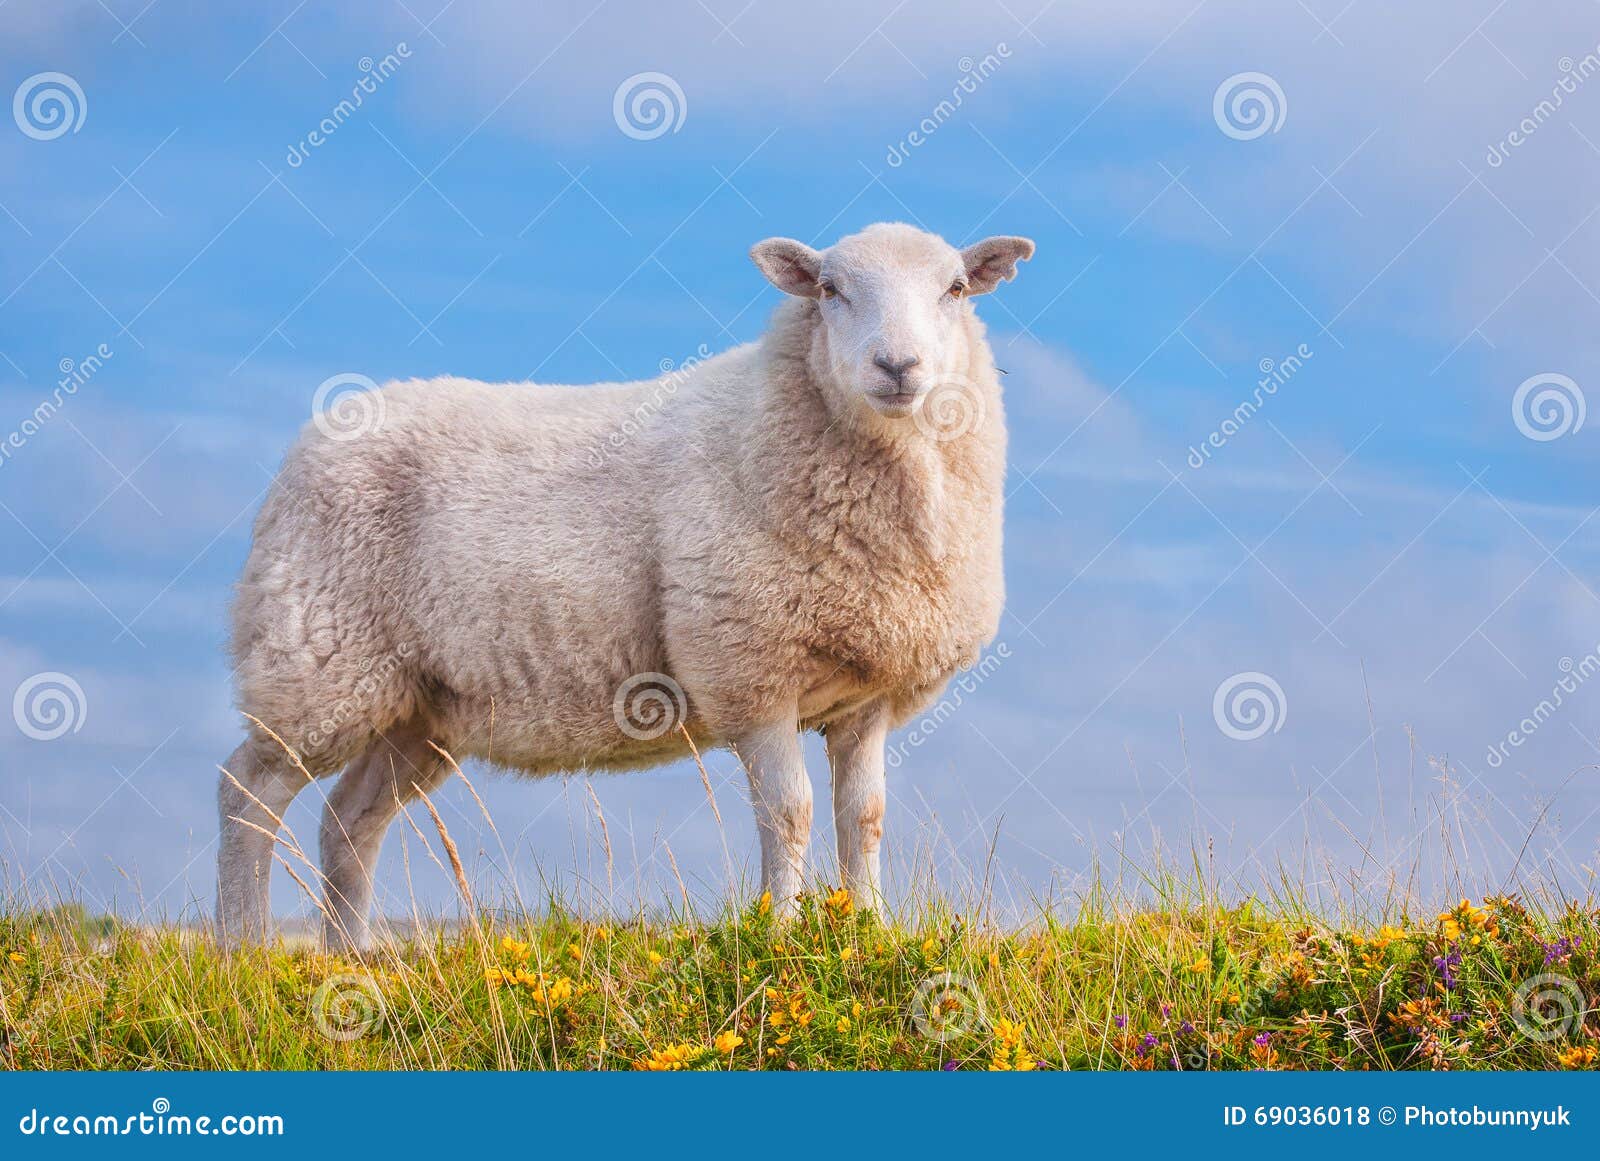 lone sheep against blue sky